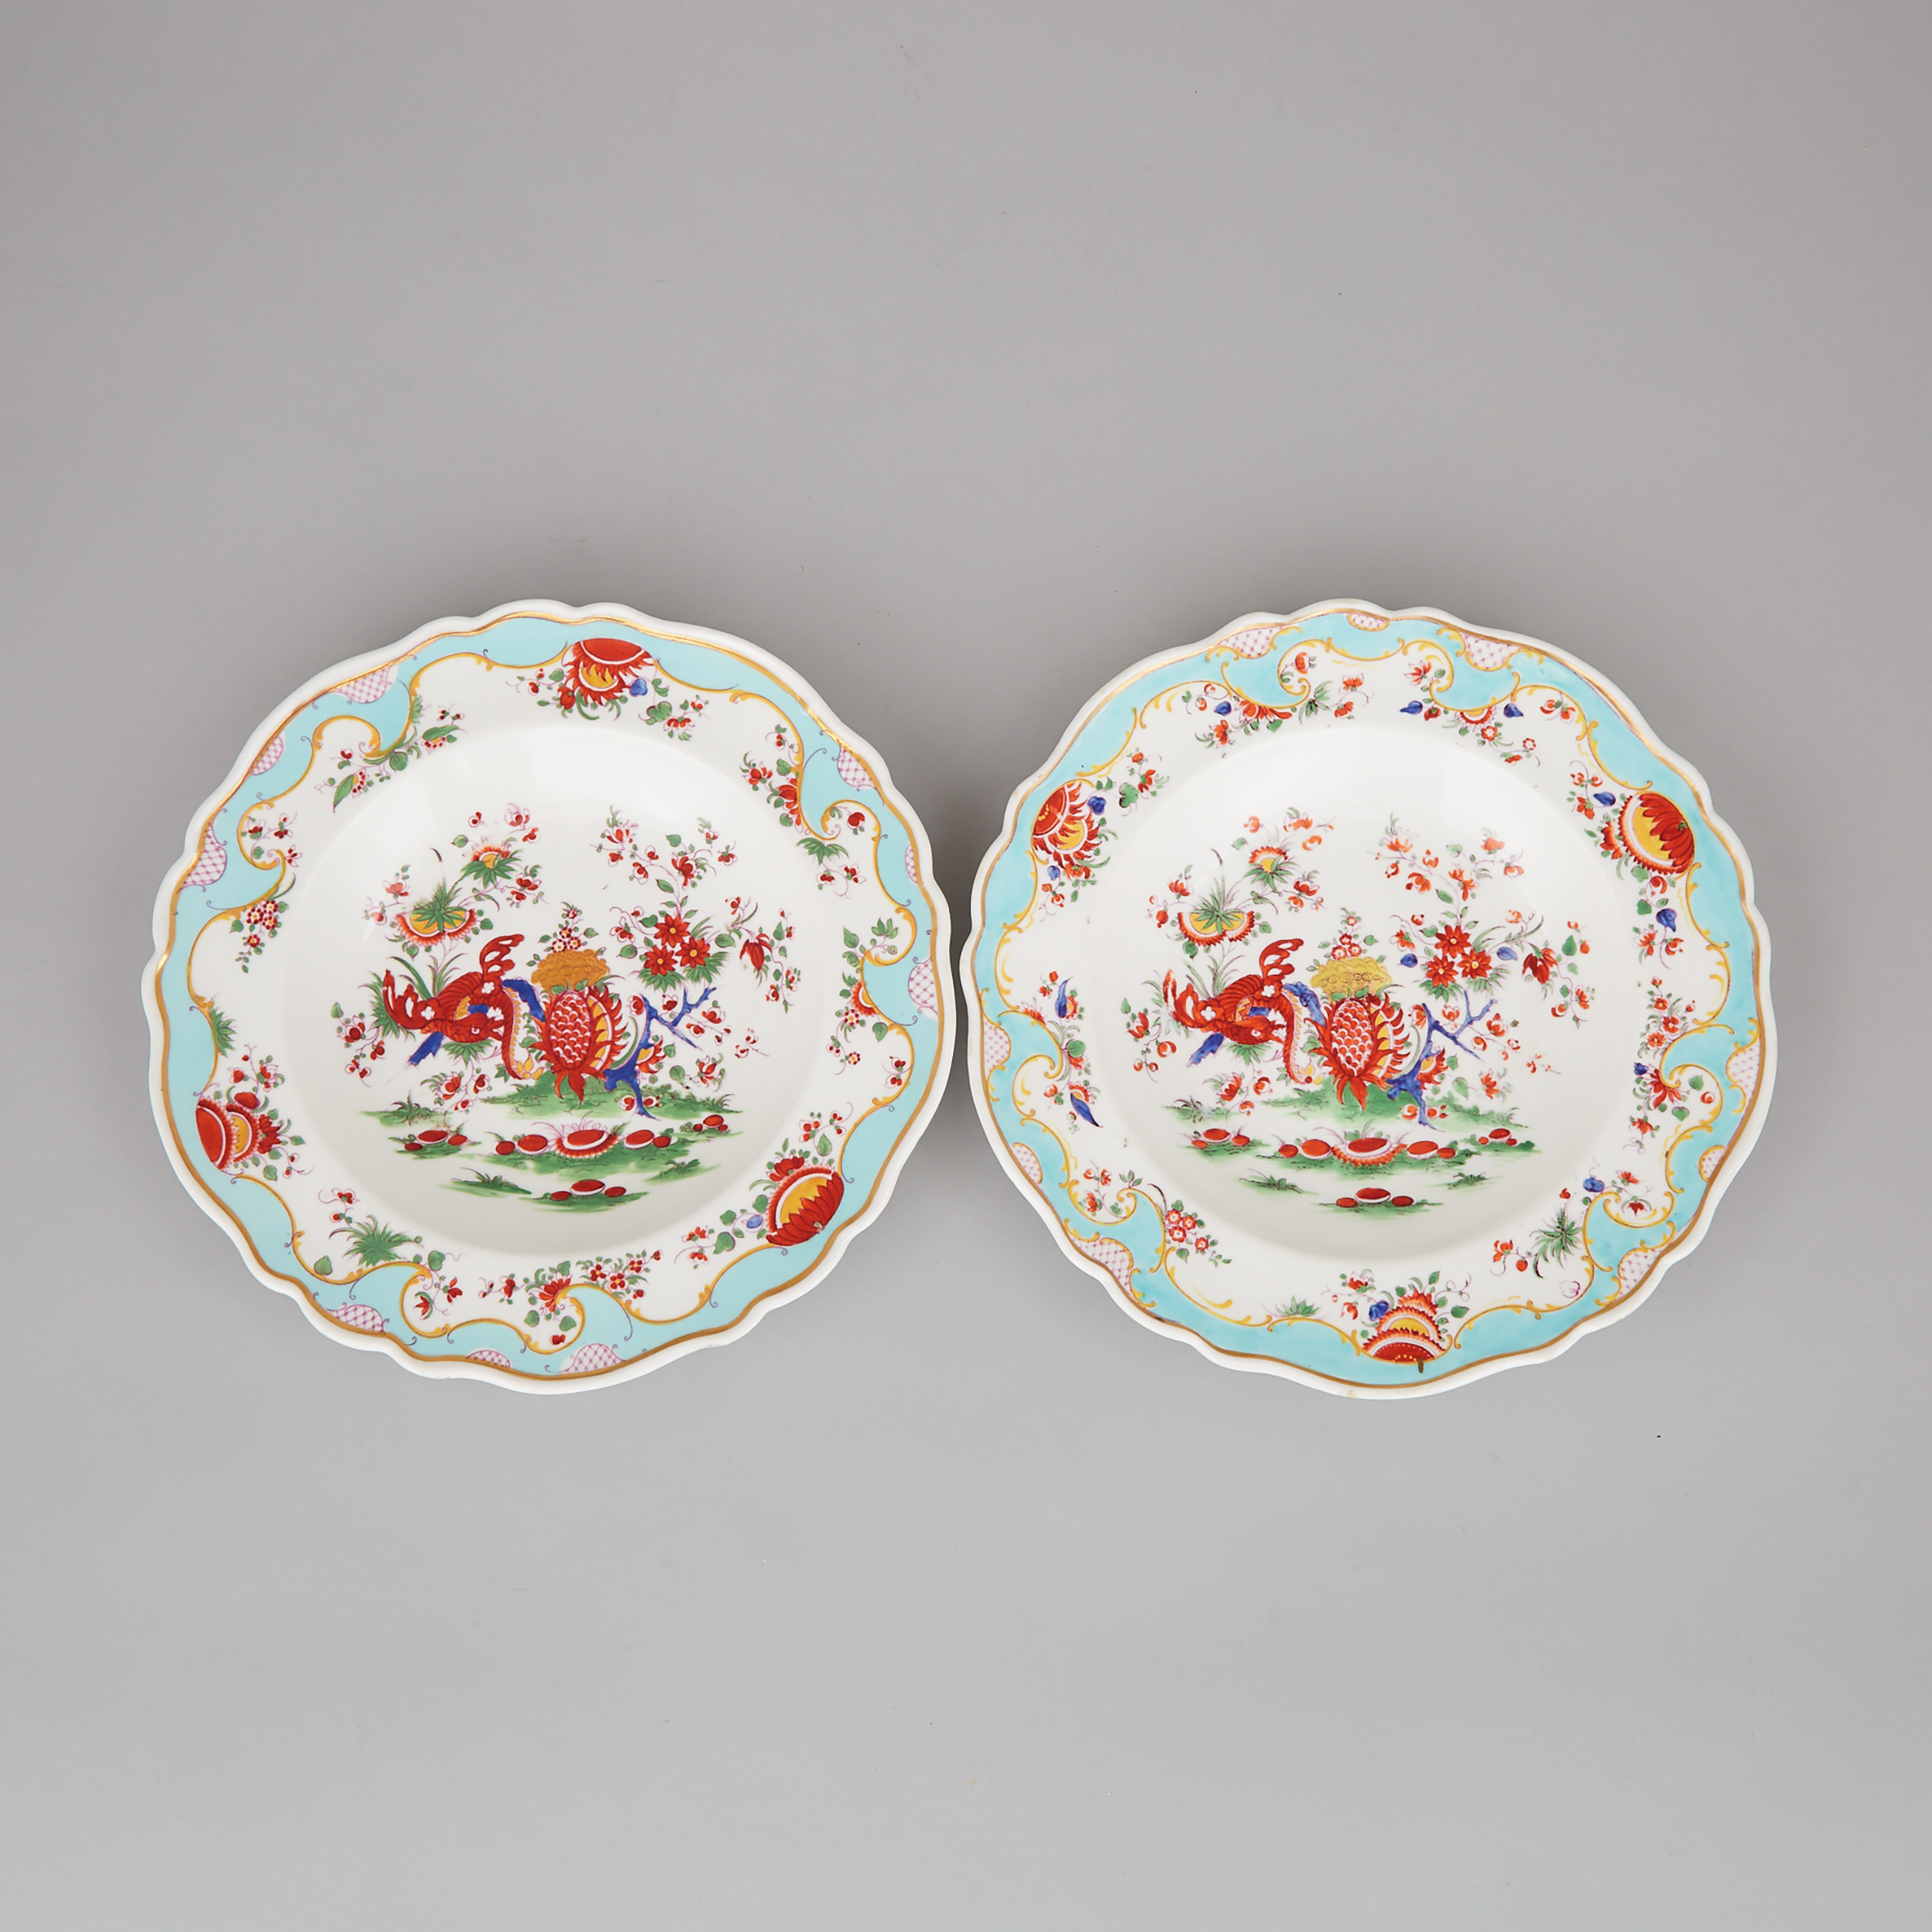 Pair of Chamberlains Worcester ‘Jabberwocky’ Pattern Soup Plates, c.1830-40